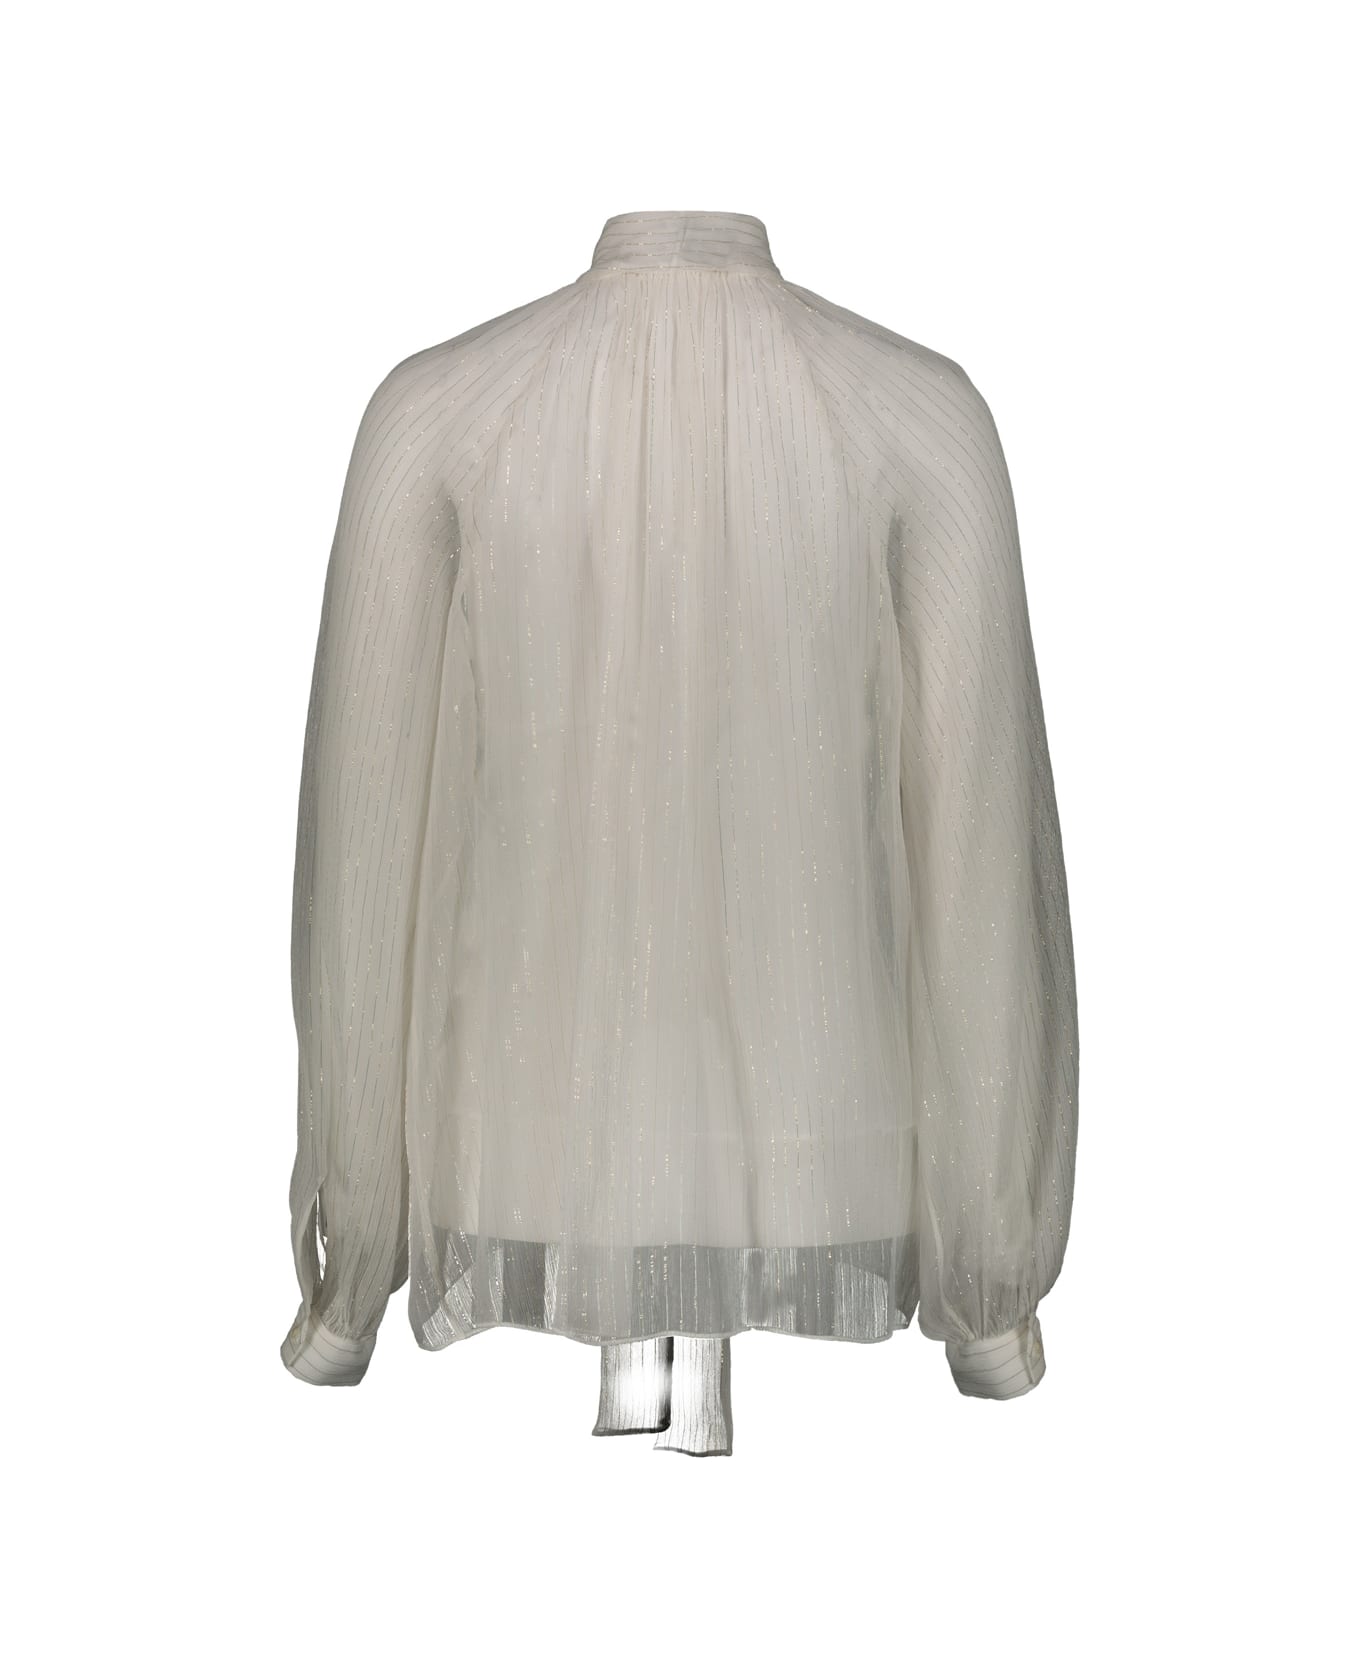 Rochas Bow Shirt In Lurex Striped Silk Chiffon